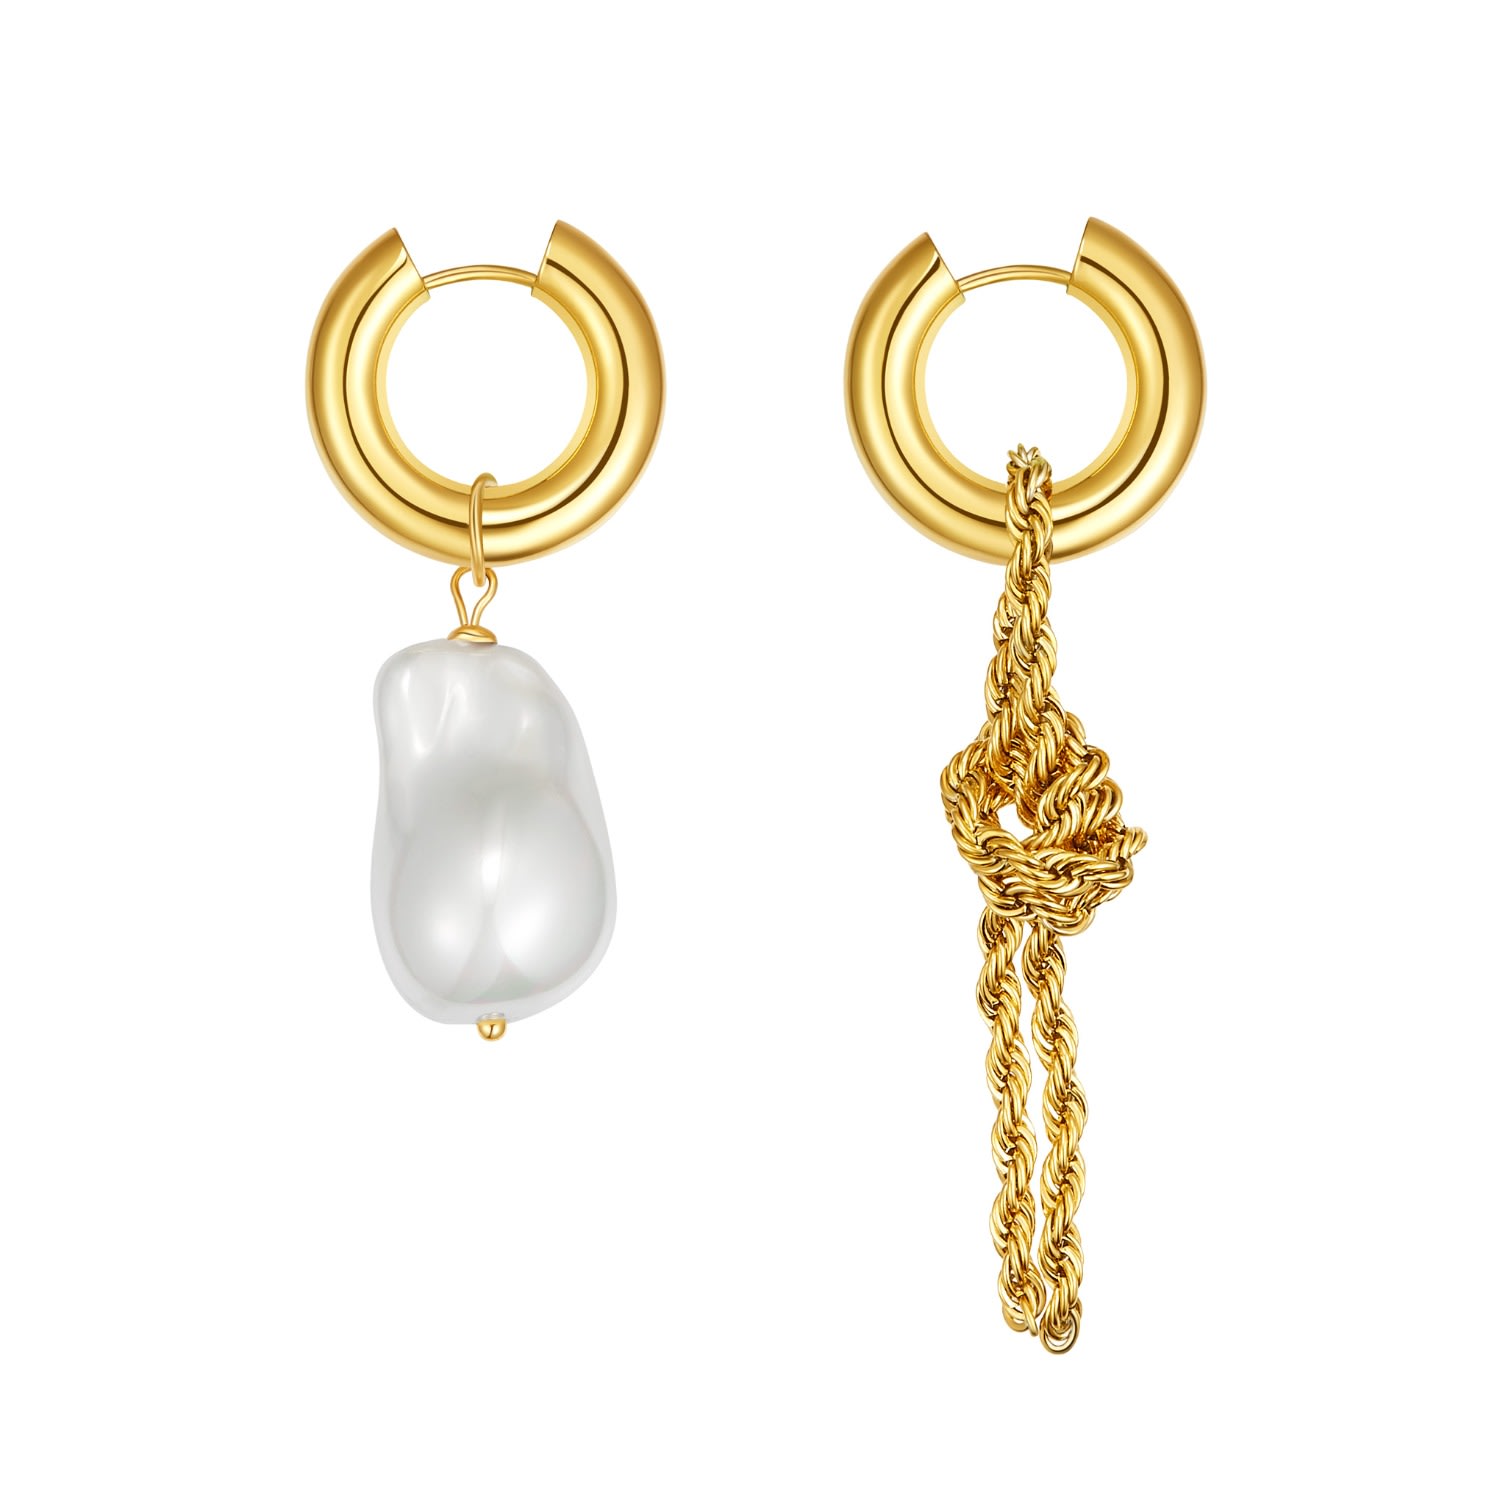 Shop Classicharms Women's Asymmetrical Gold Rope Chain Baroque Pearl Drop Earrings